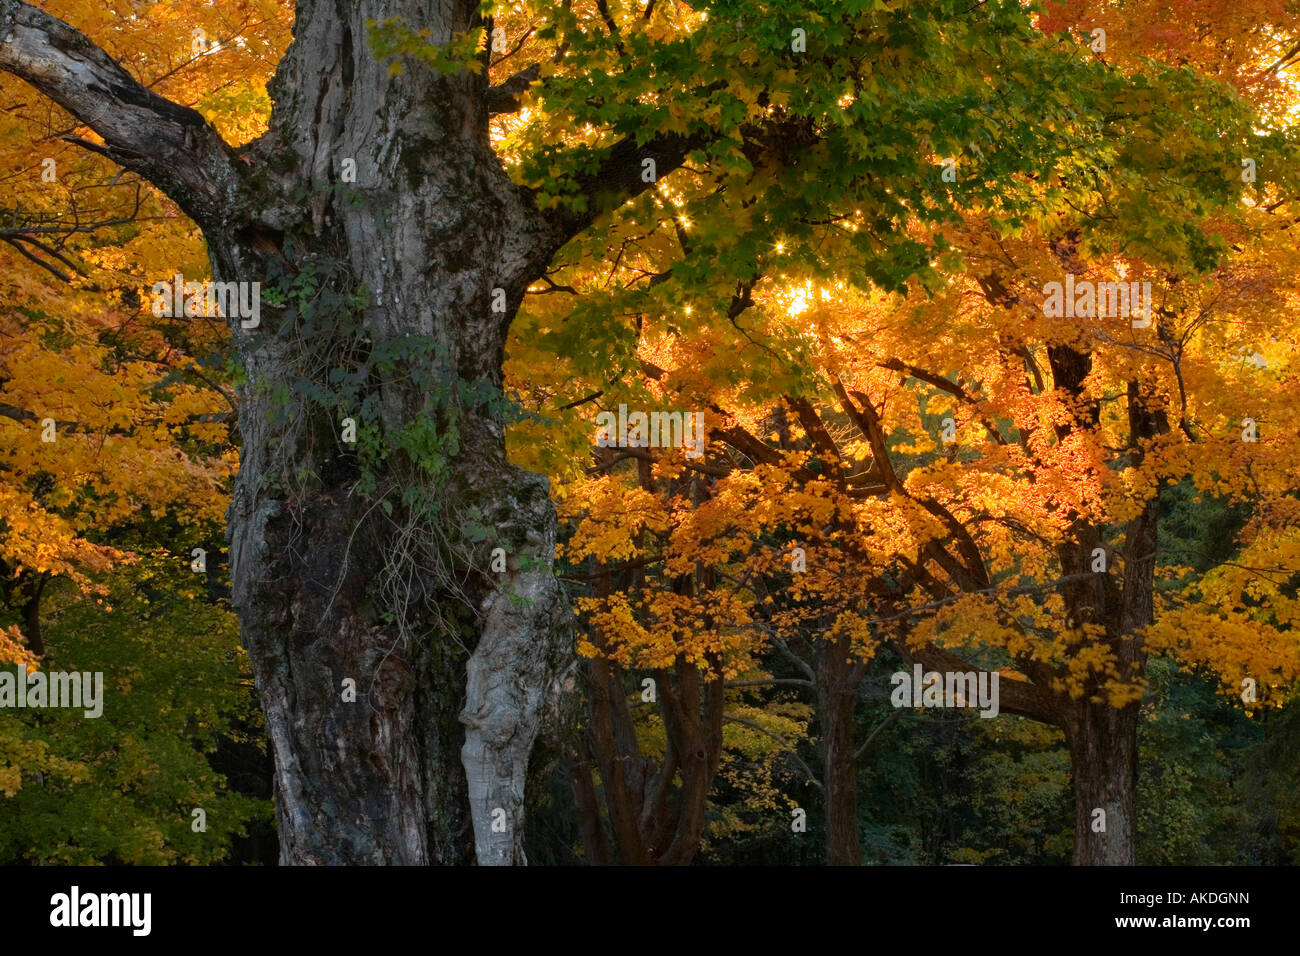 Fall foliage in Massachusetts Berkshires Stock Photo - Alamy